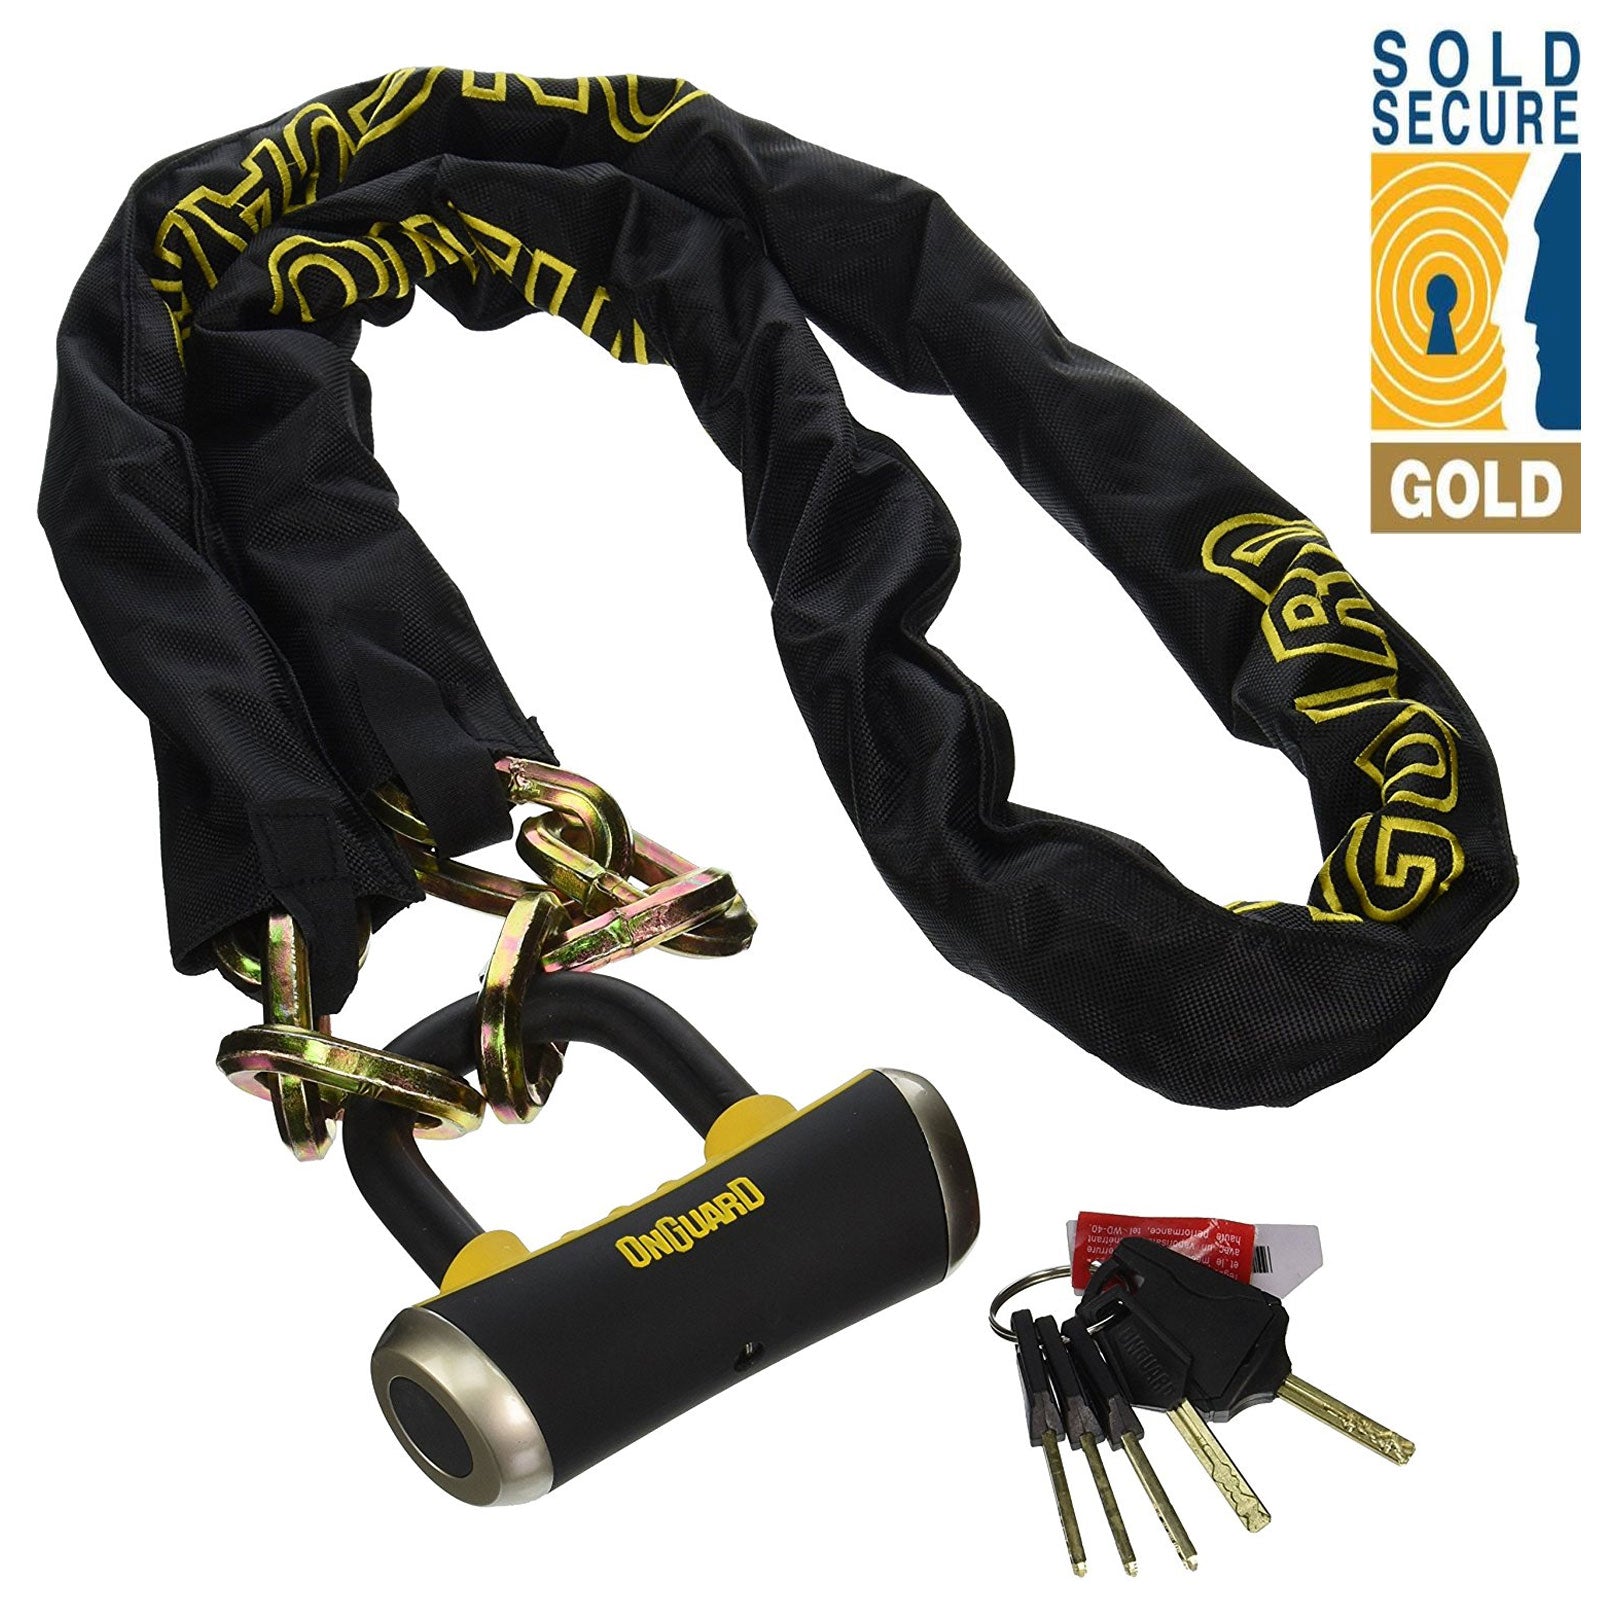 Onguard Mastiff 8019 Bike Chain Lock Sold Secure Gold